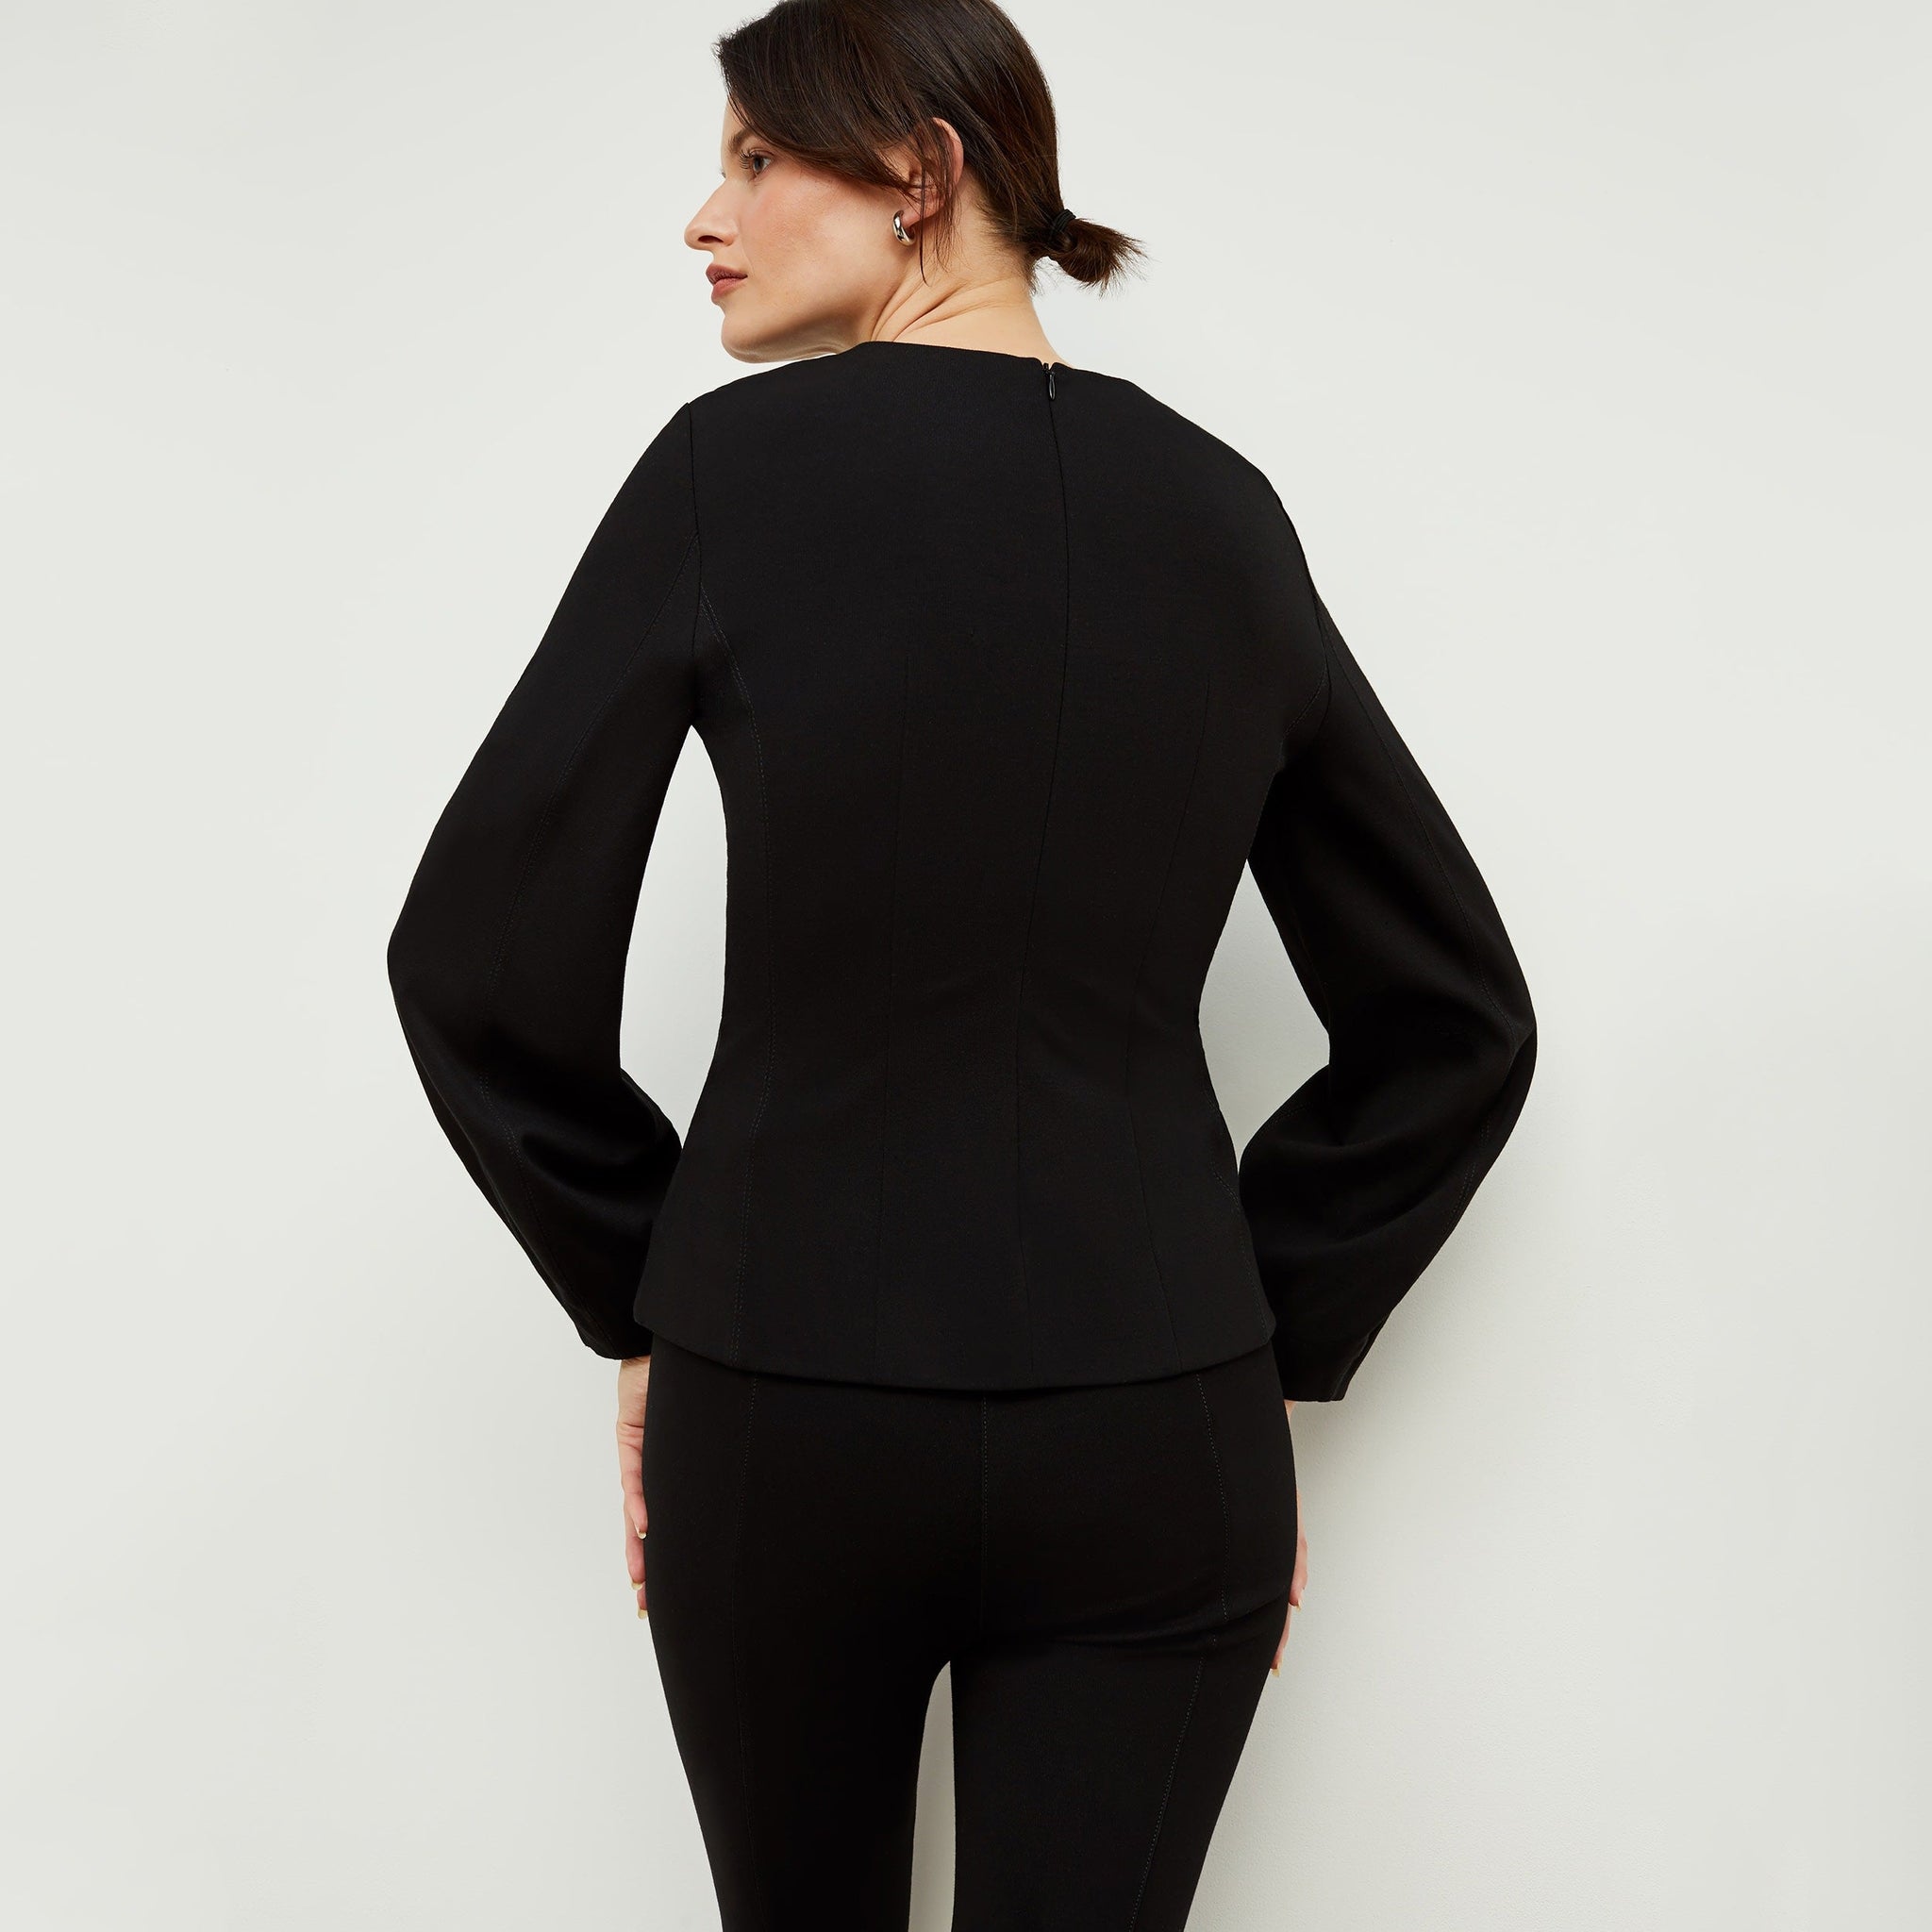 Back image of a woman standing wearing the rashida top in black